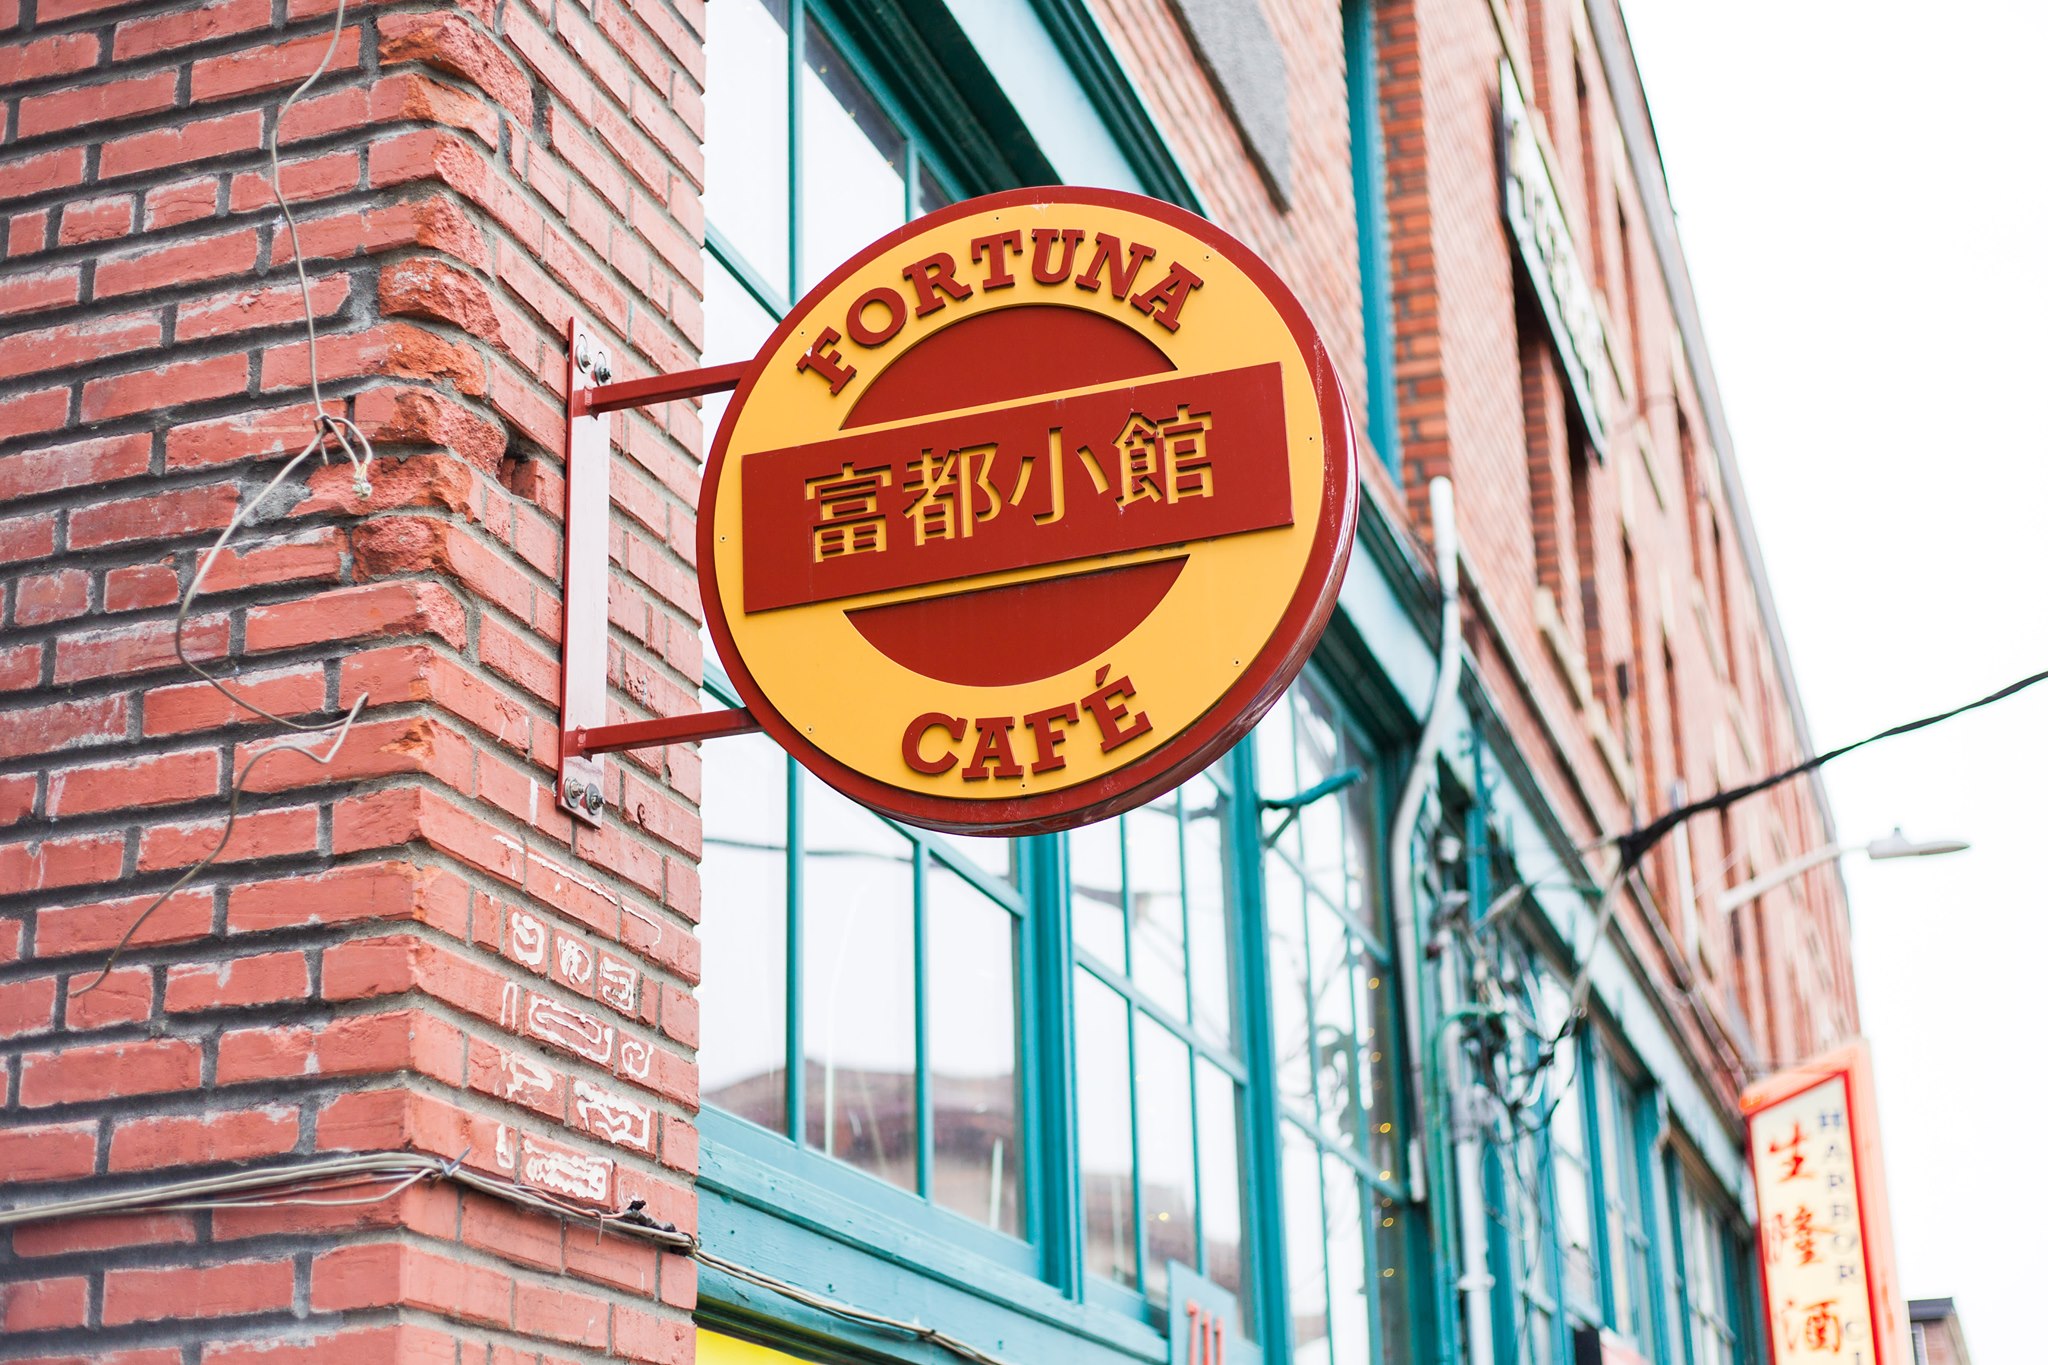 Fortuna Cafe